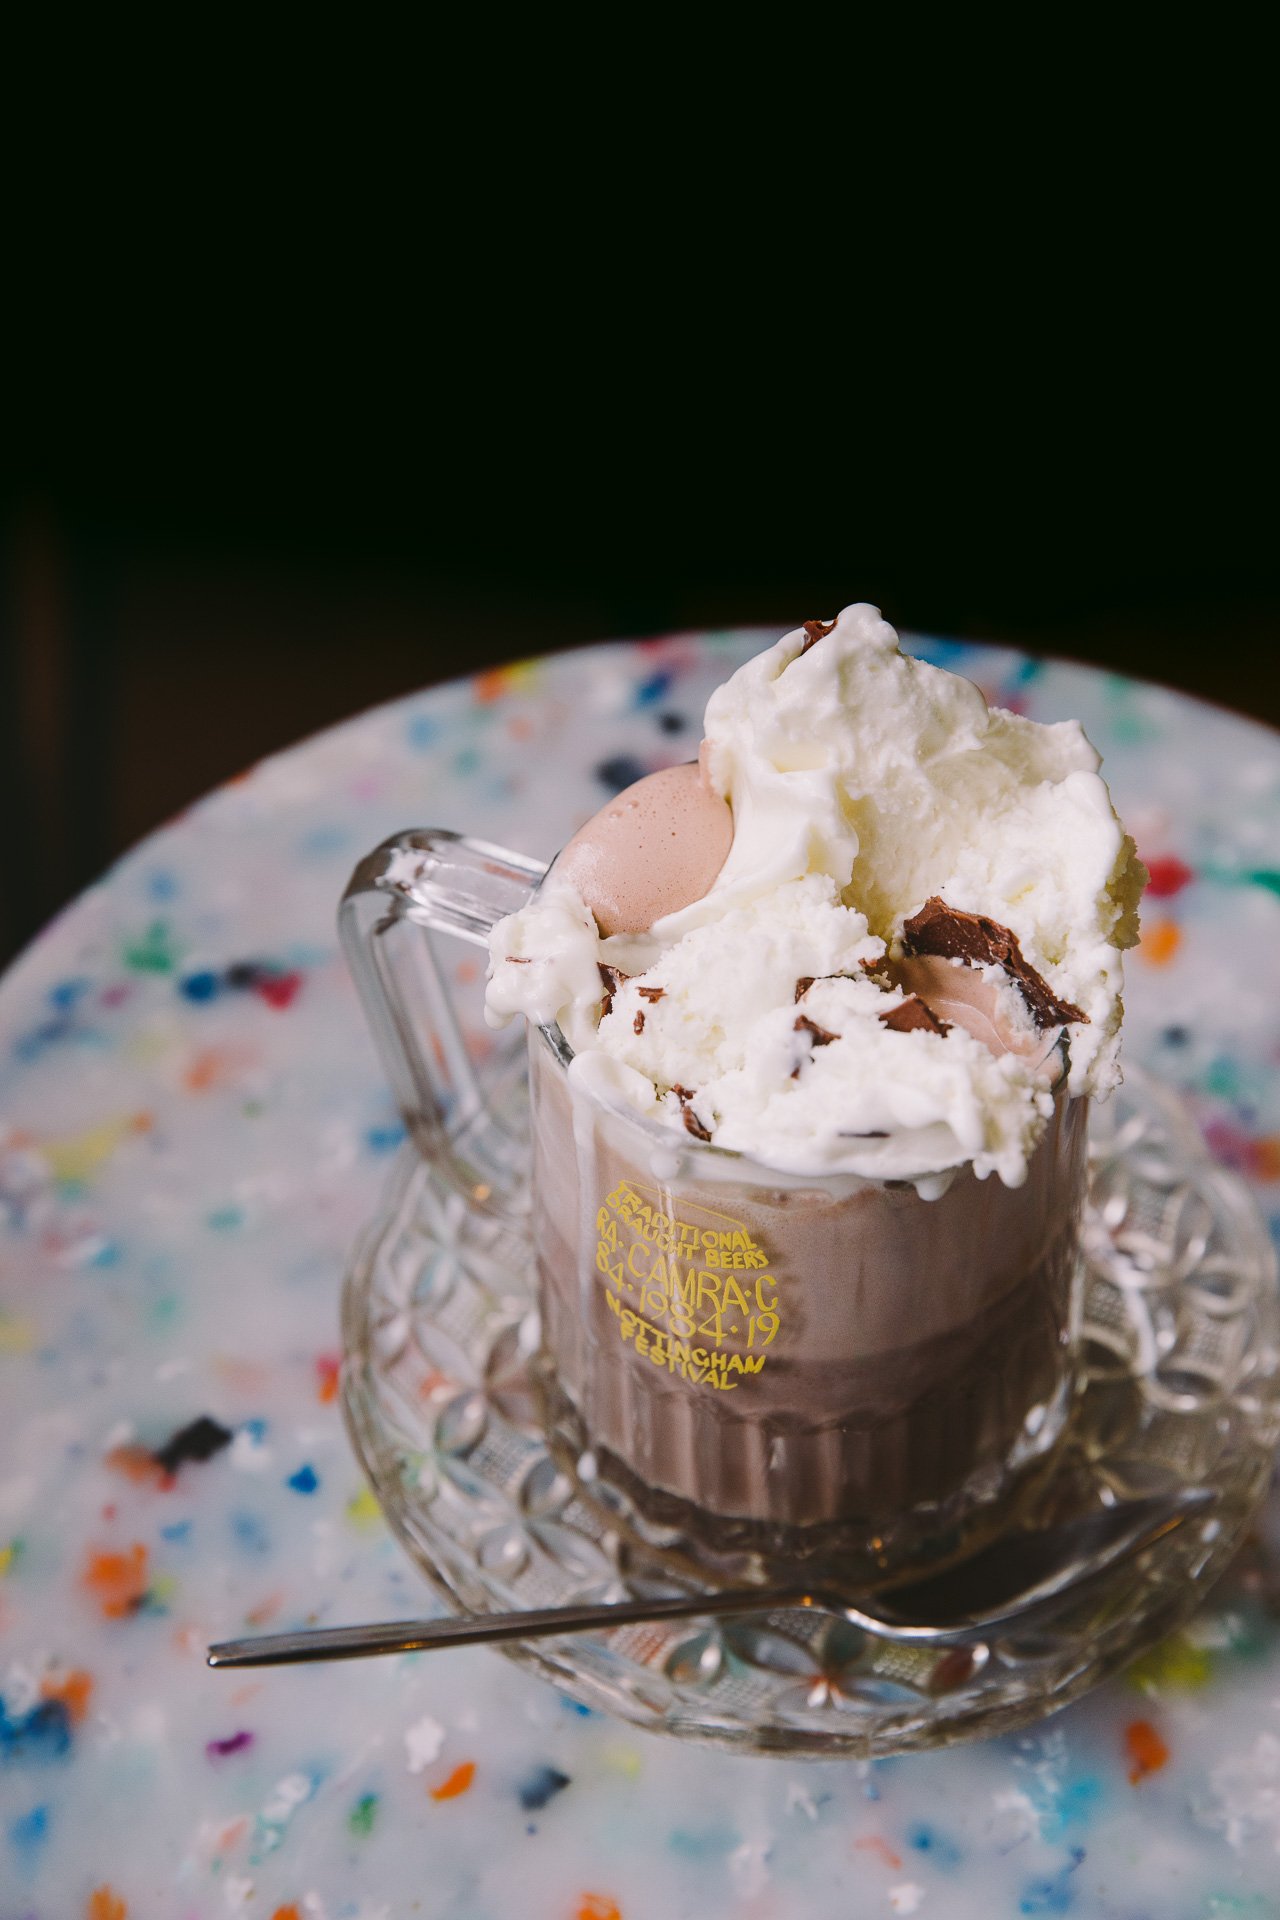 Hot Chocolate Float from Mary's Milk Bar | Edinburgh Travel Guide by HonestlyYUM